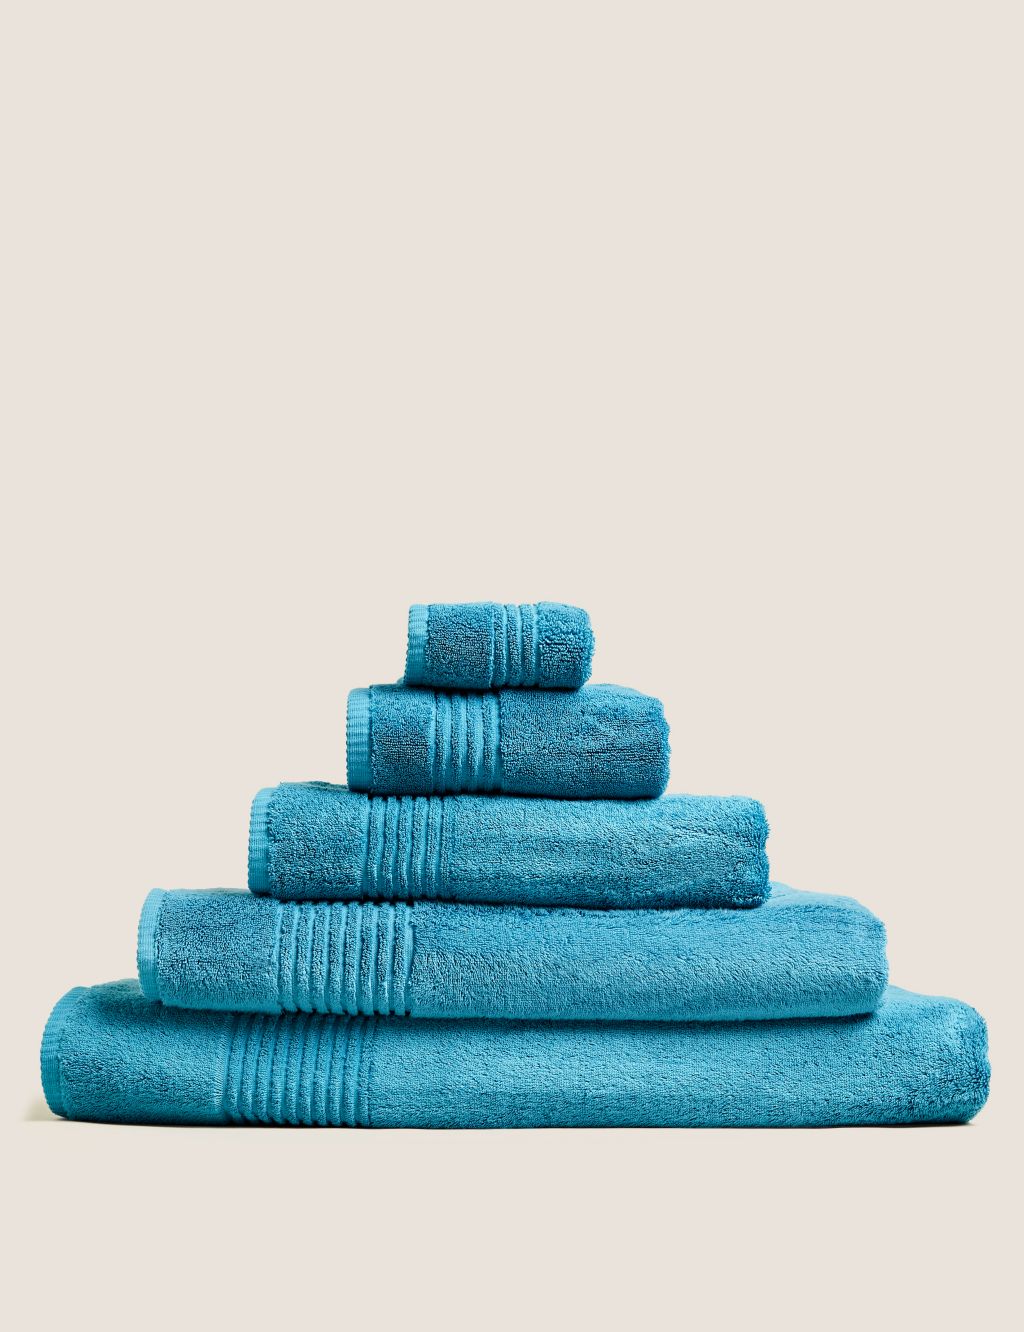 Egyptian Cotton Luxury Towel image 2